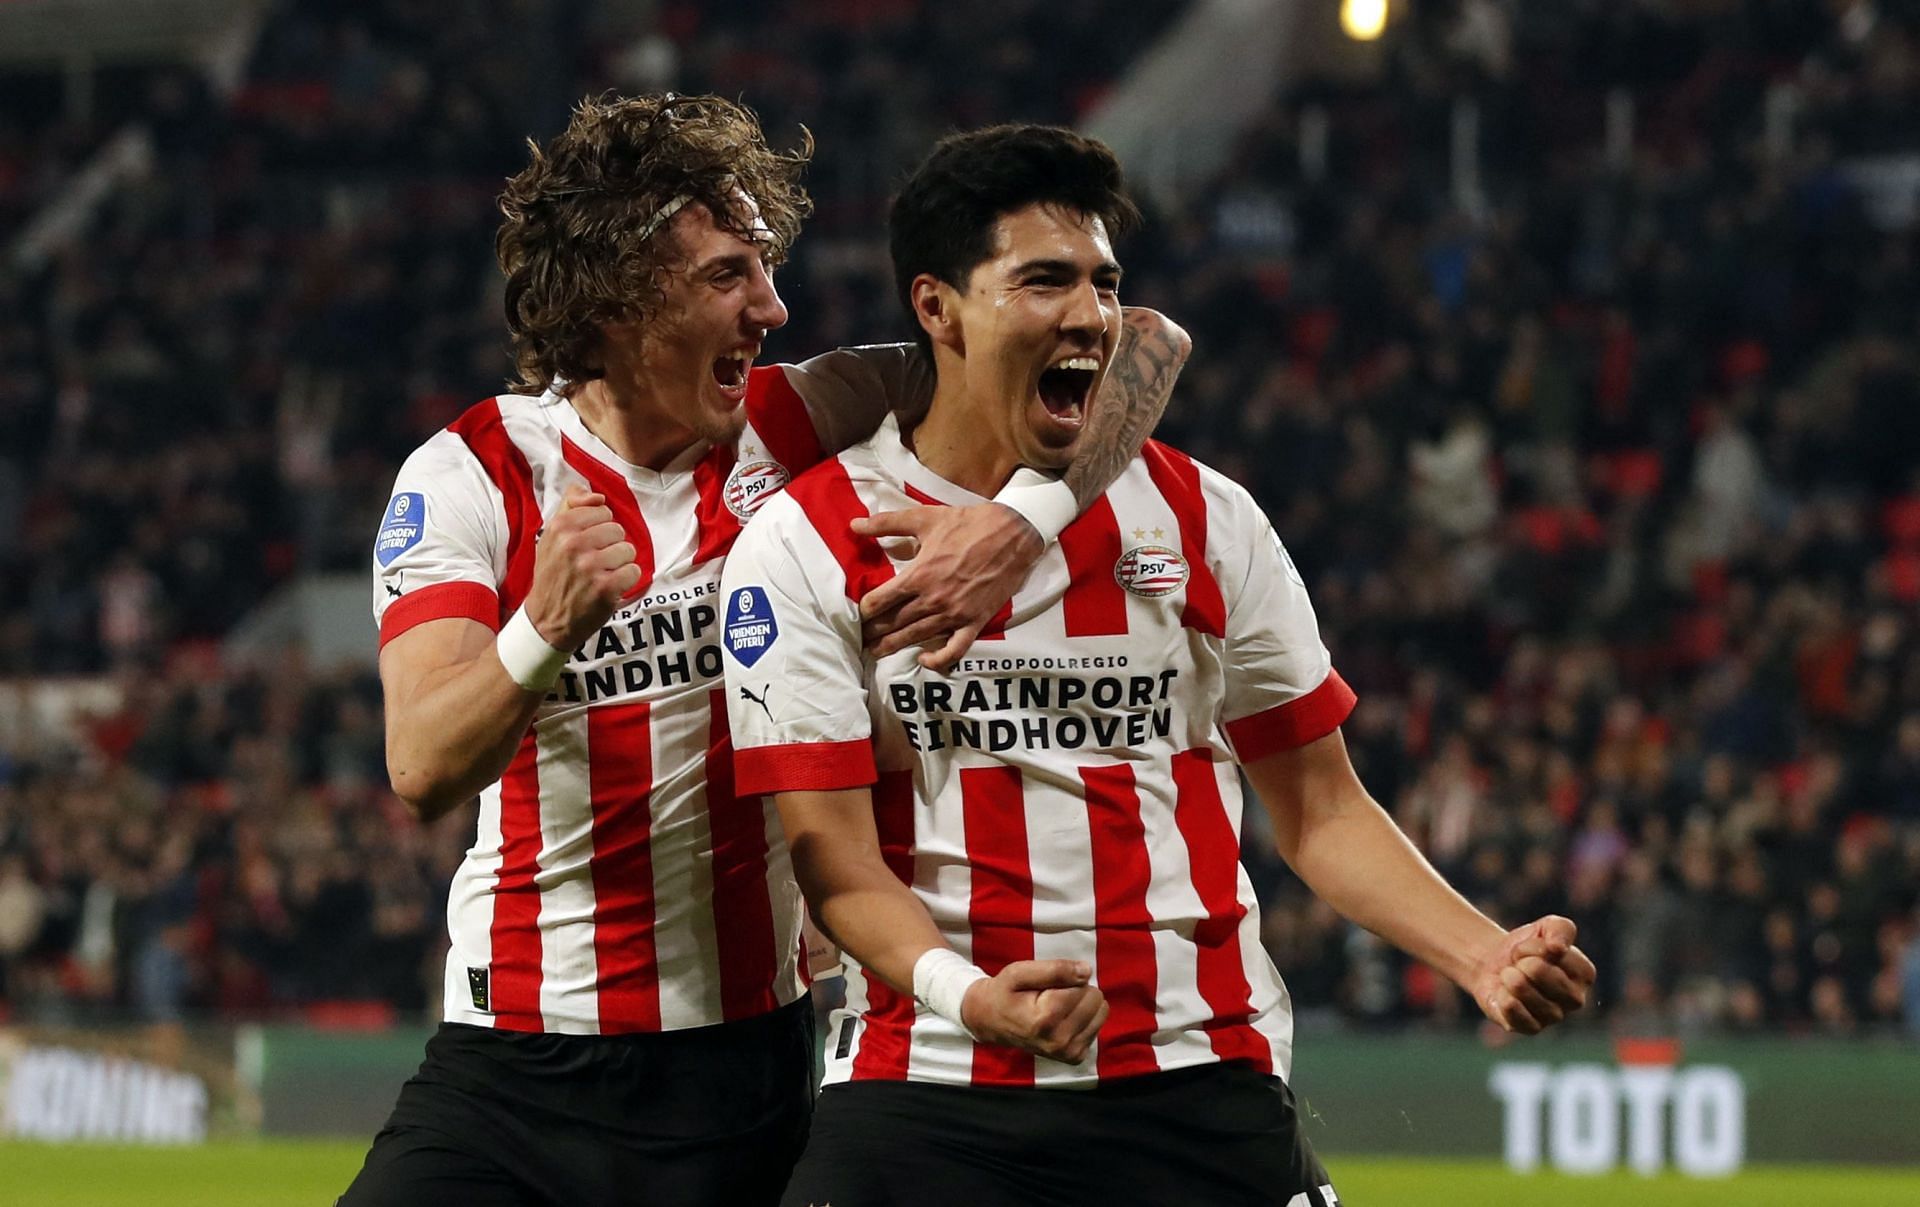 PSV Eindhoven will face Sparta Rotterdam